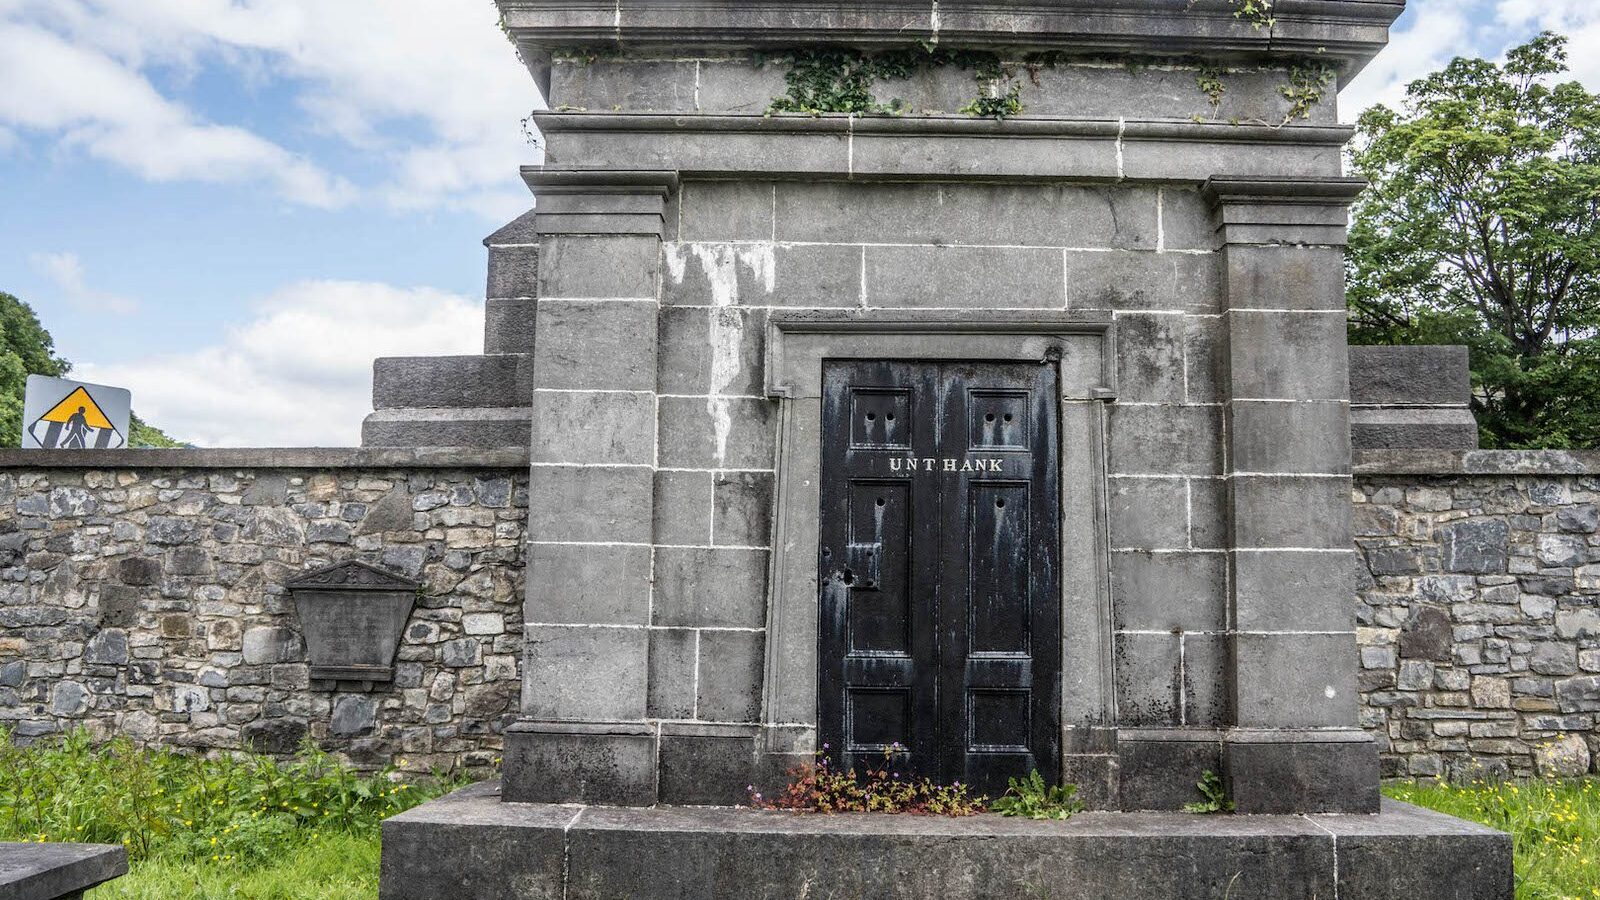 St. JOHN’S CHURCH AND GRAVEYARD IN LIMERICK [CHURCH OF IRELAND] REF-105929-1